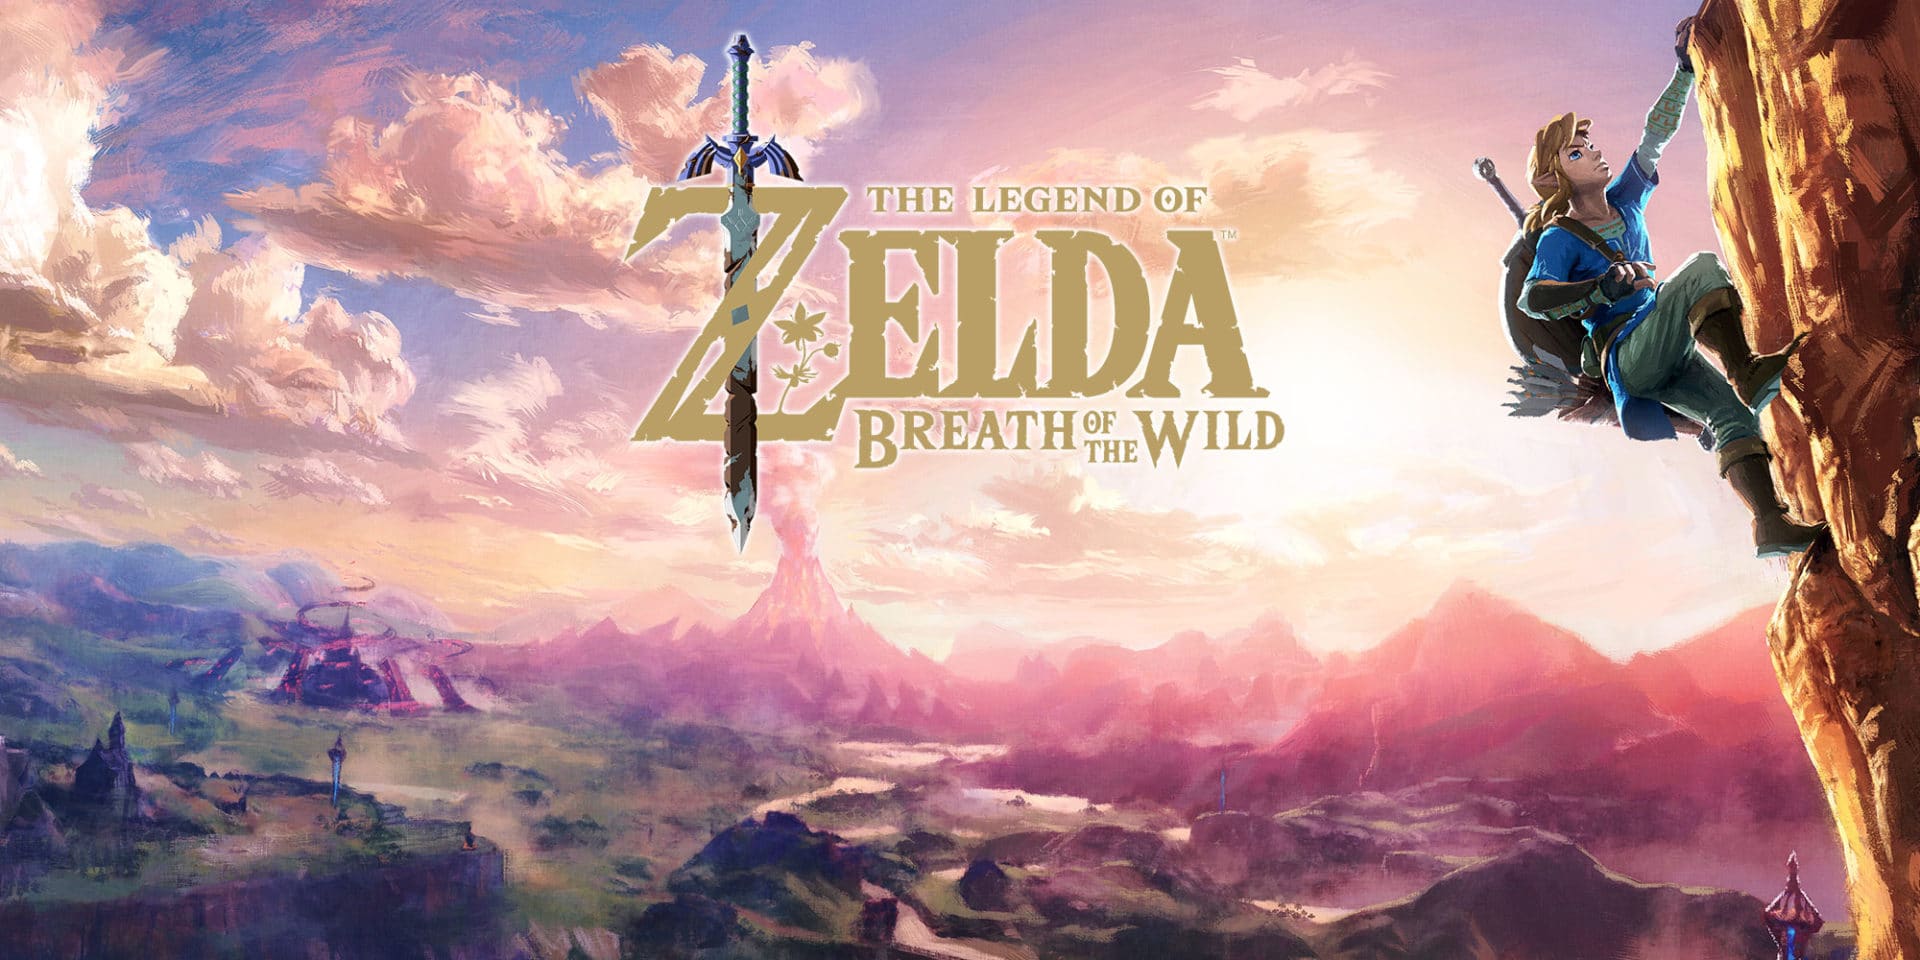 Nintendo shares special Zelda BOTW artwork